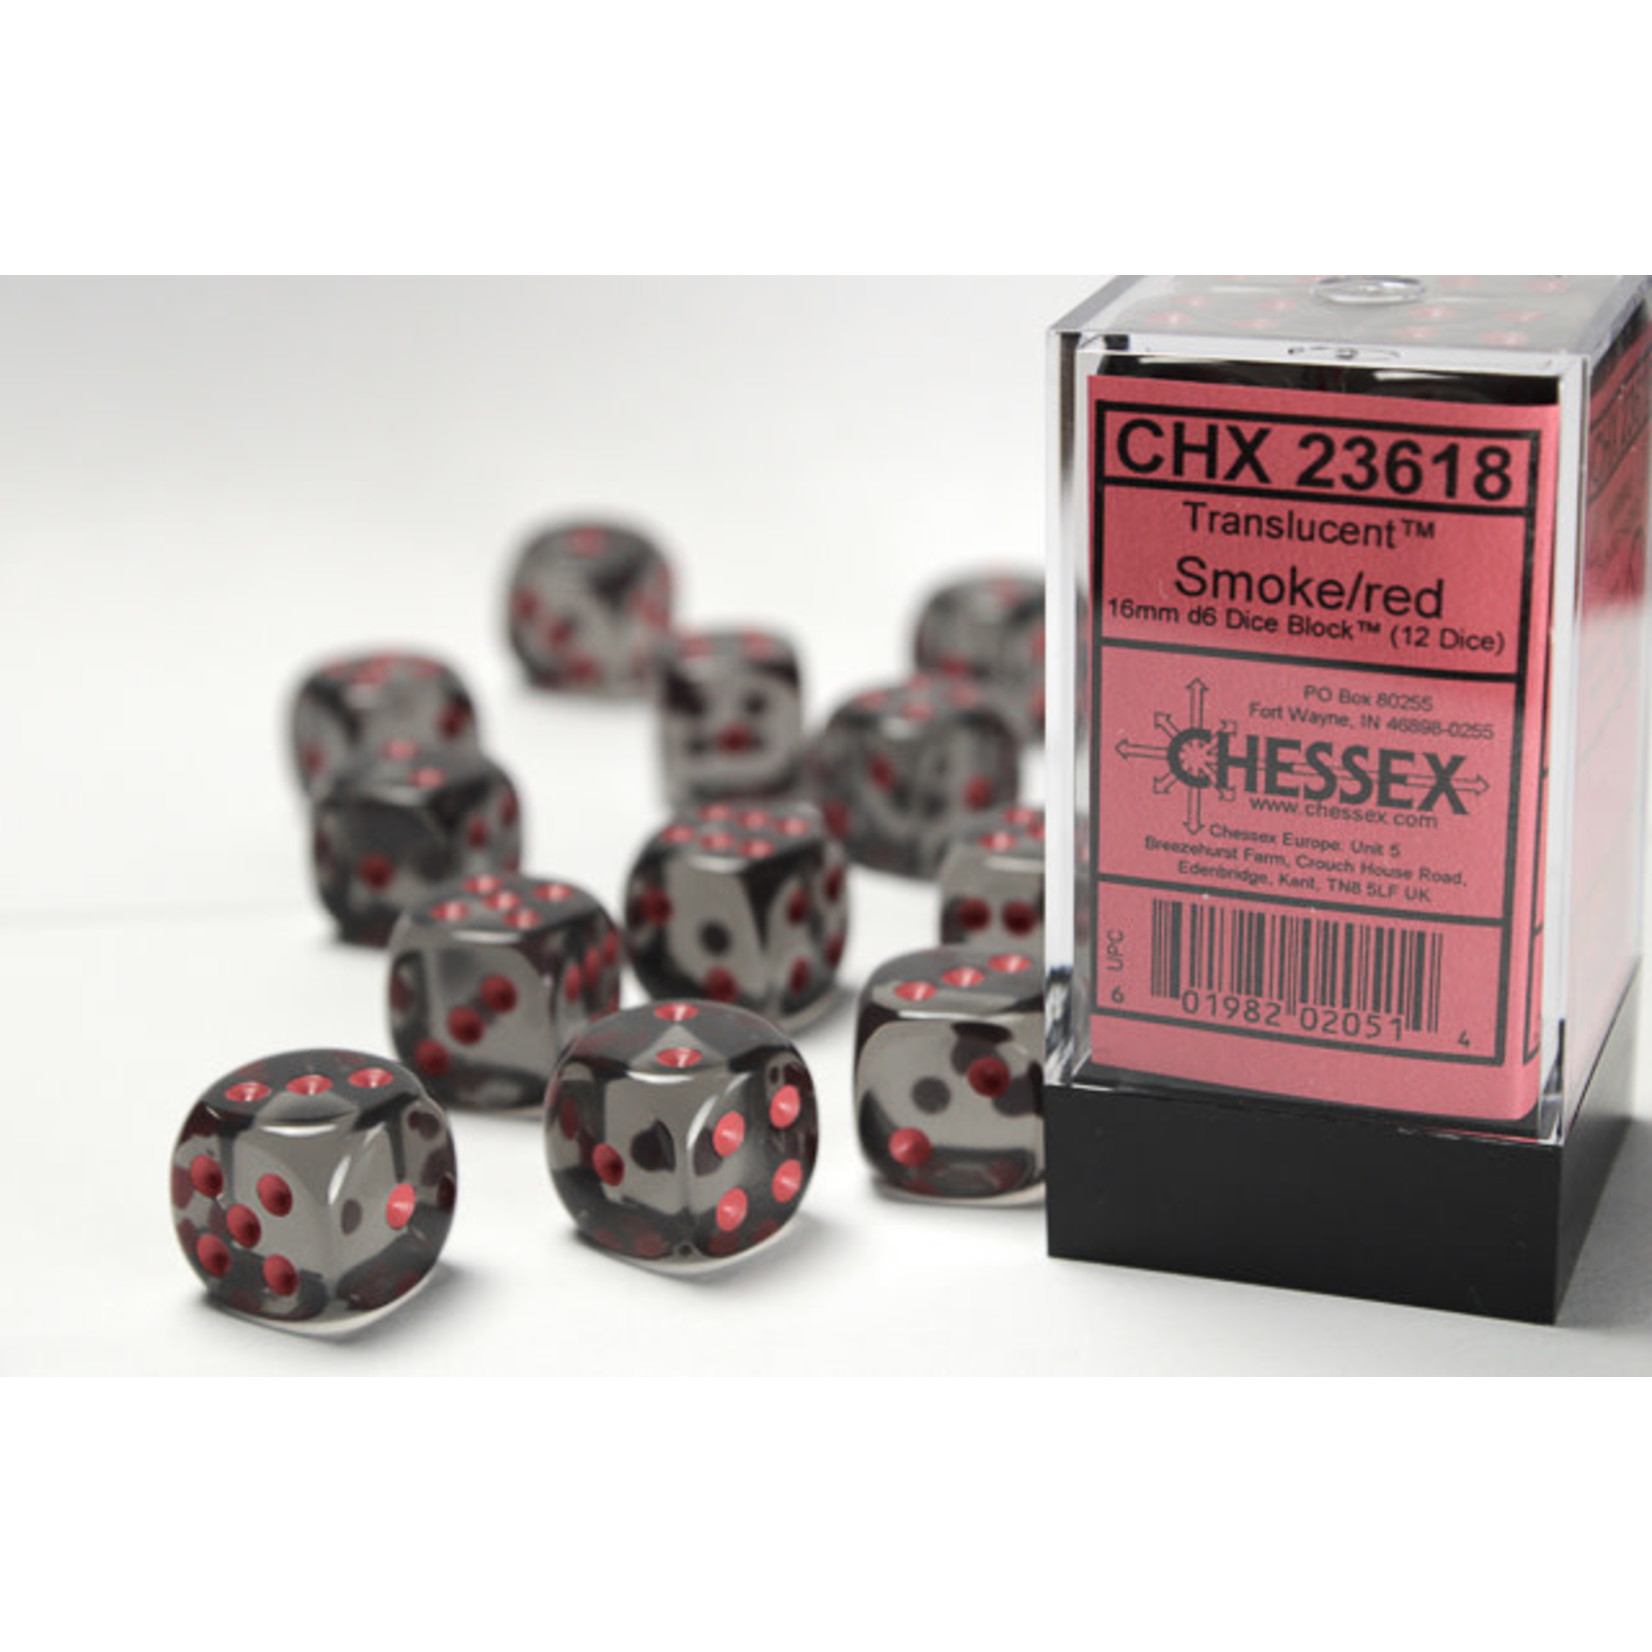 Chessex 16mm Dice 23618 12pc Translucent Smoke/Red